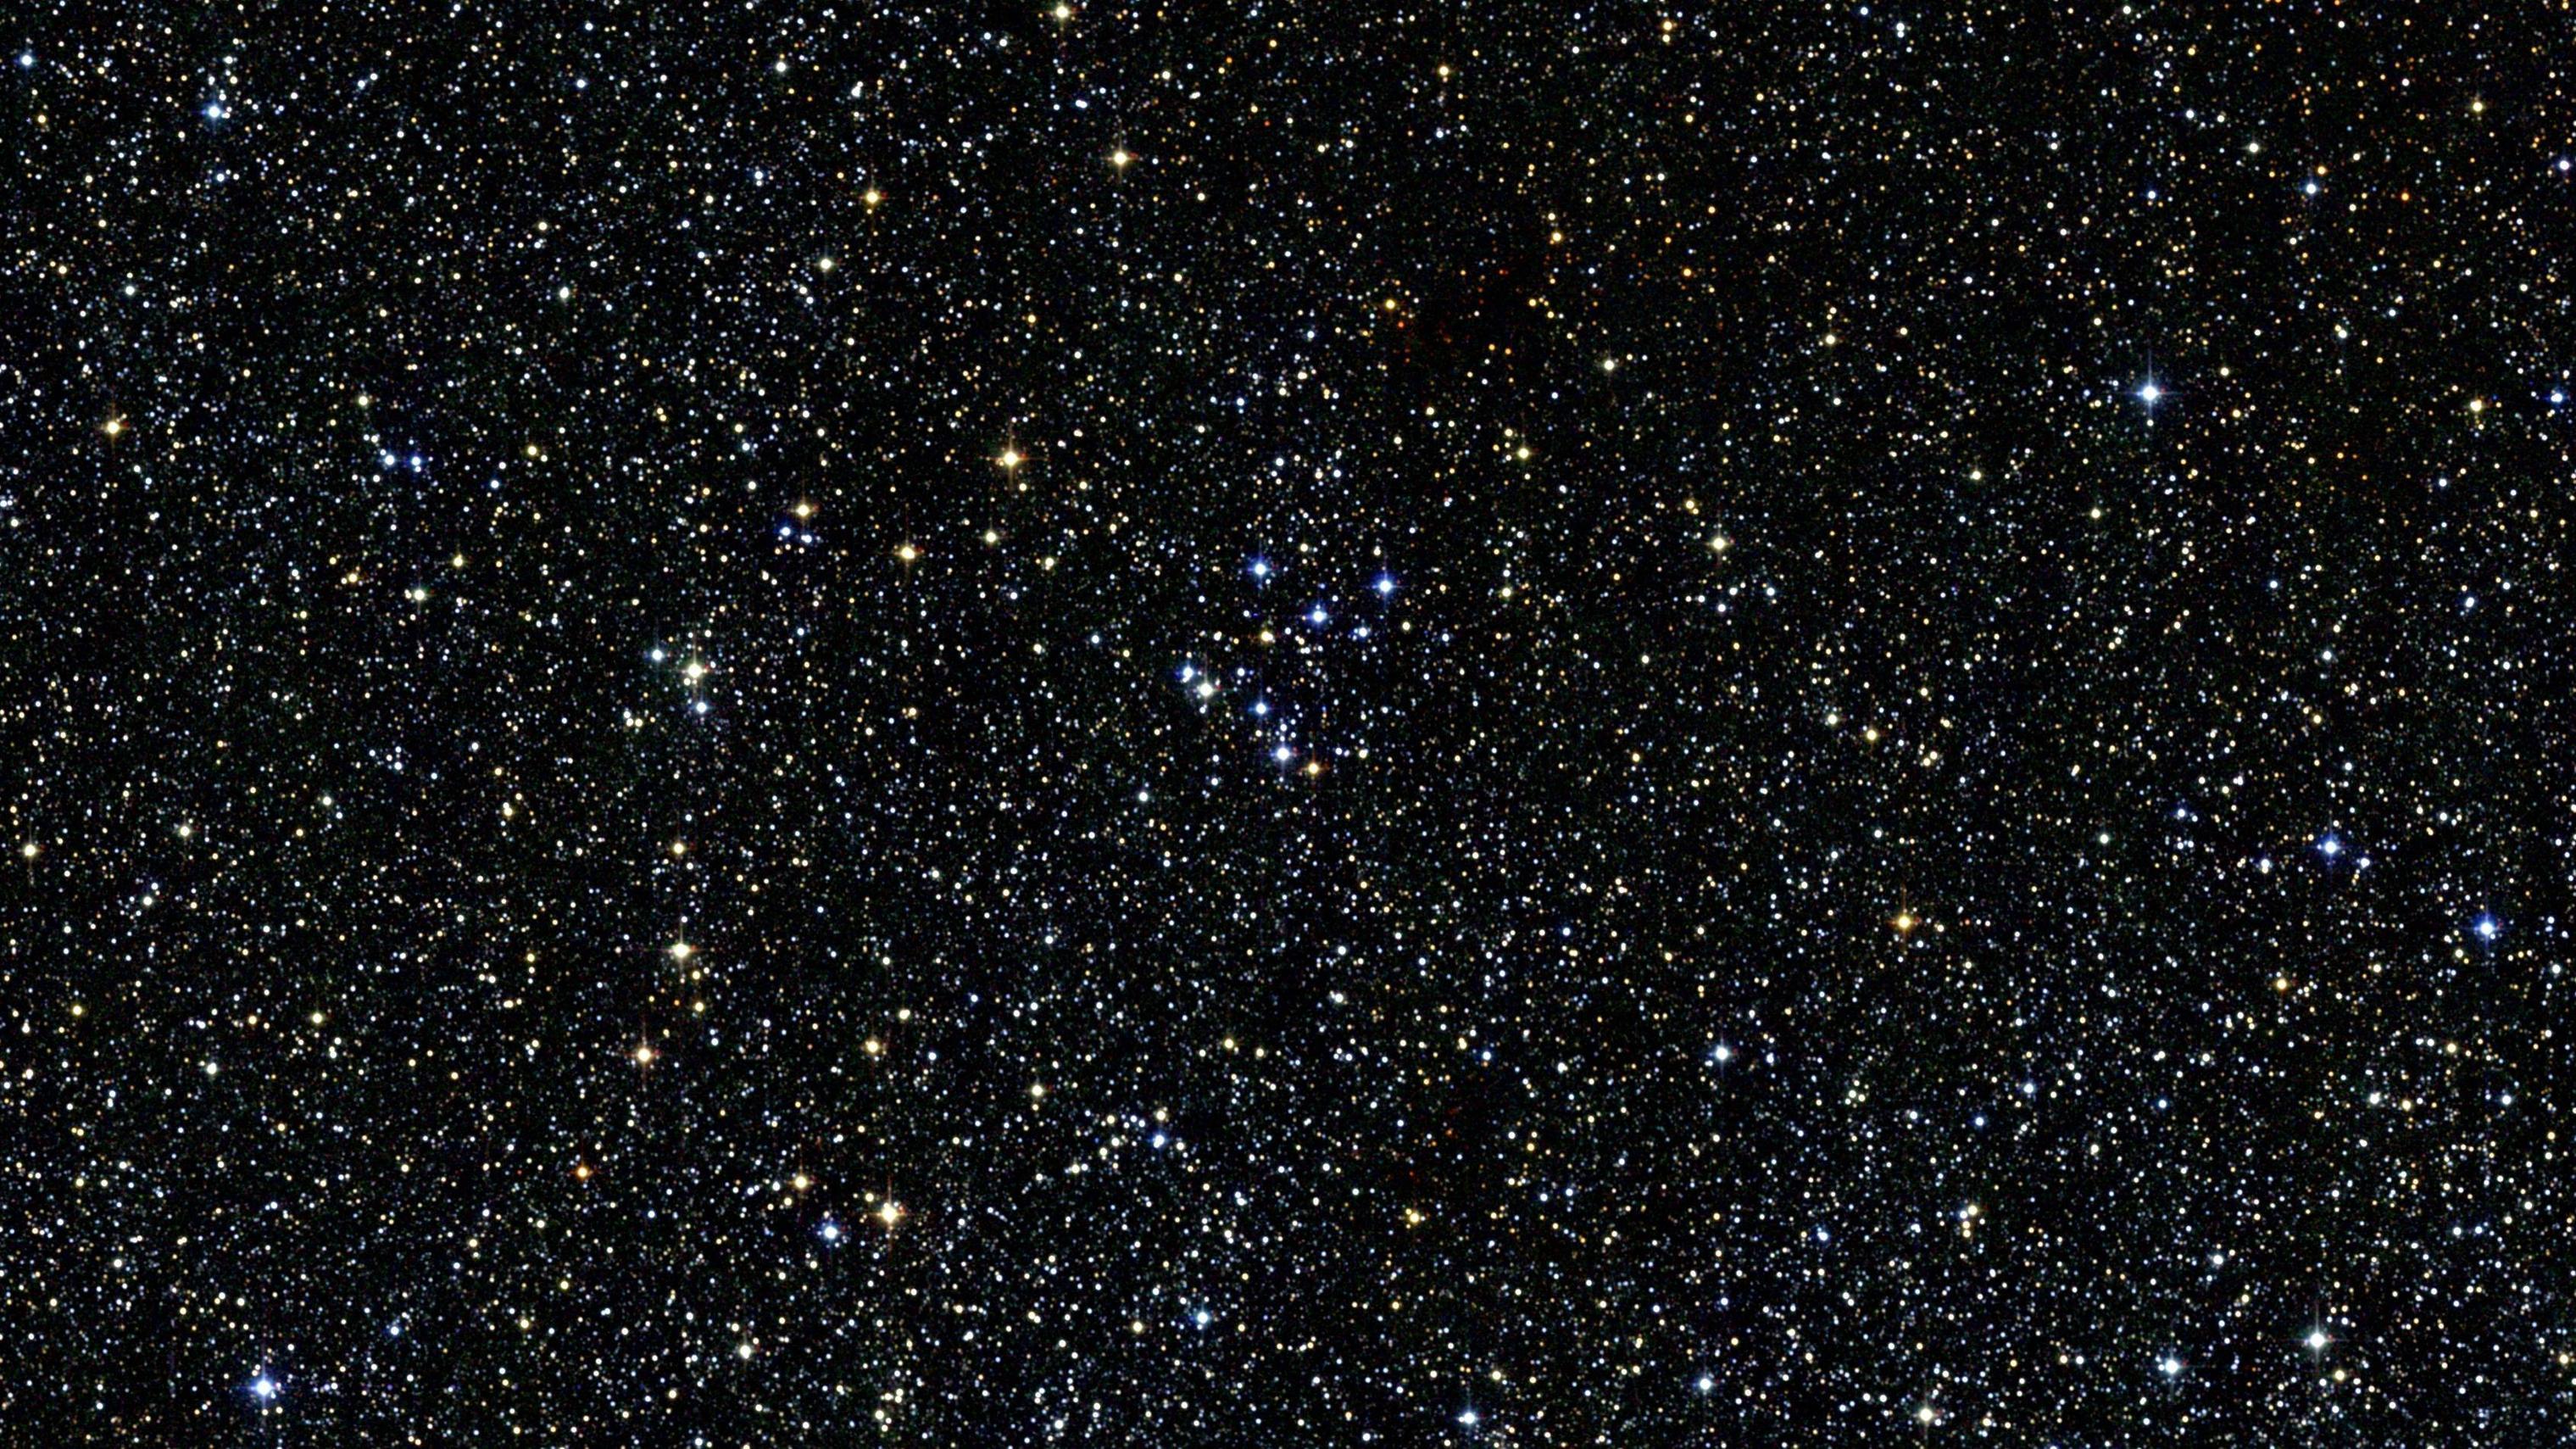 stars in space wallpaper